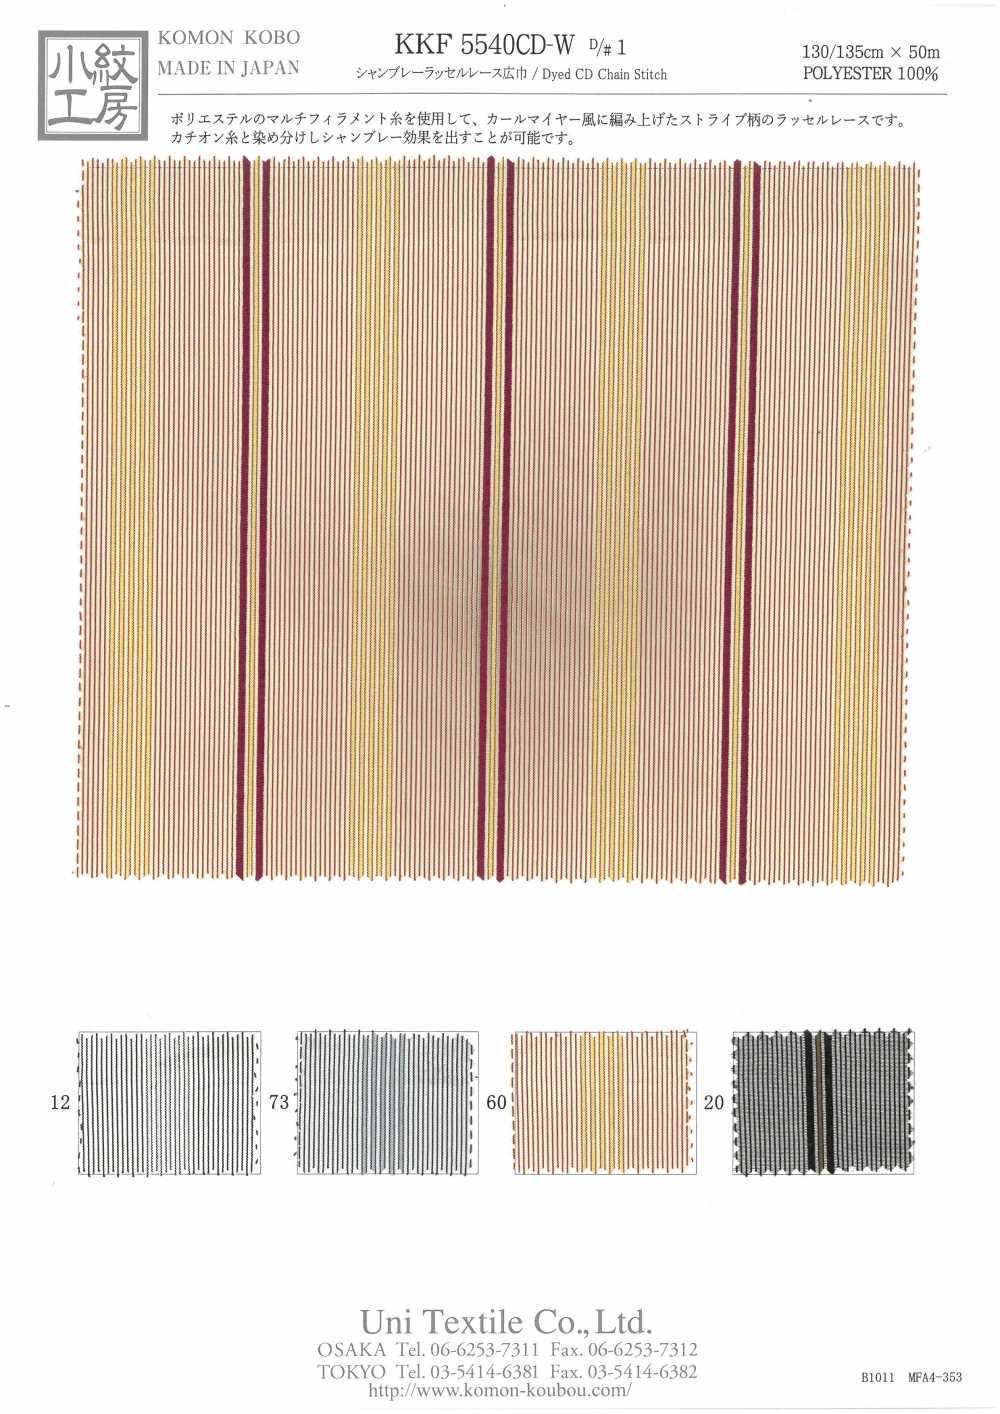 KKF5540CD-W-D/1 Chambray Raschelspitze Breite Breite[Textilgewebe] Uni Textile